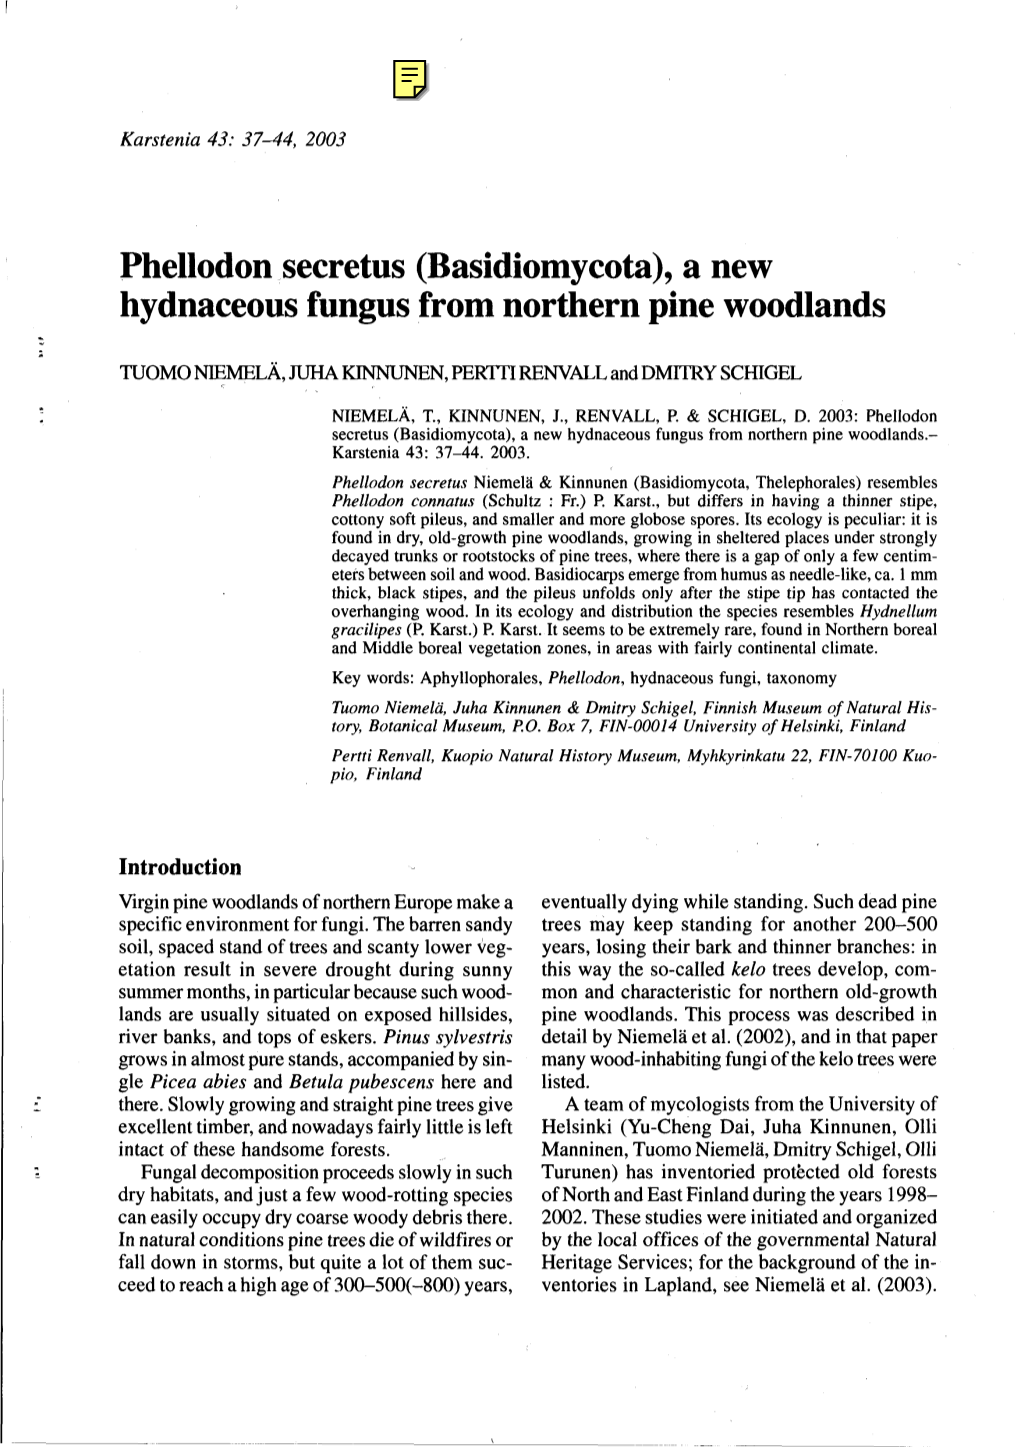 Phellodon Secretus (Basidiomycota), a New Hydnaceous Fungus from Northern Pine Woodlands